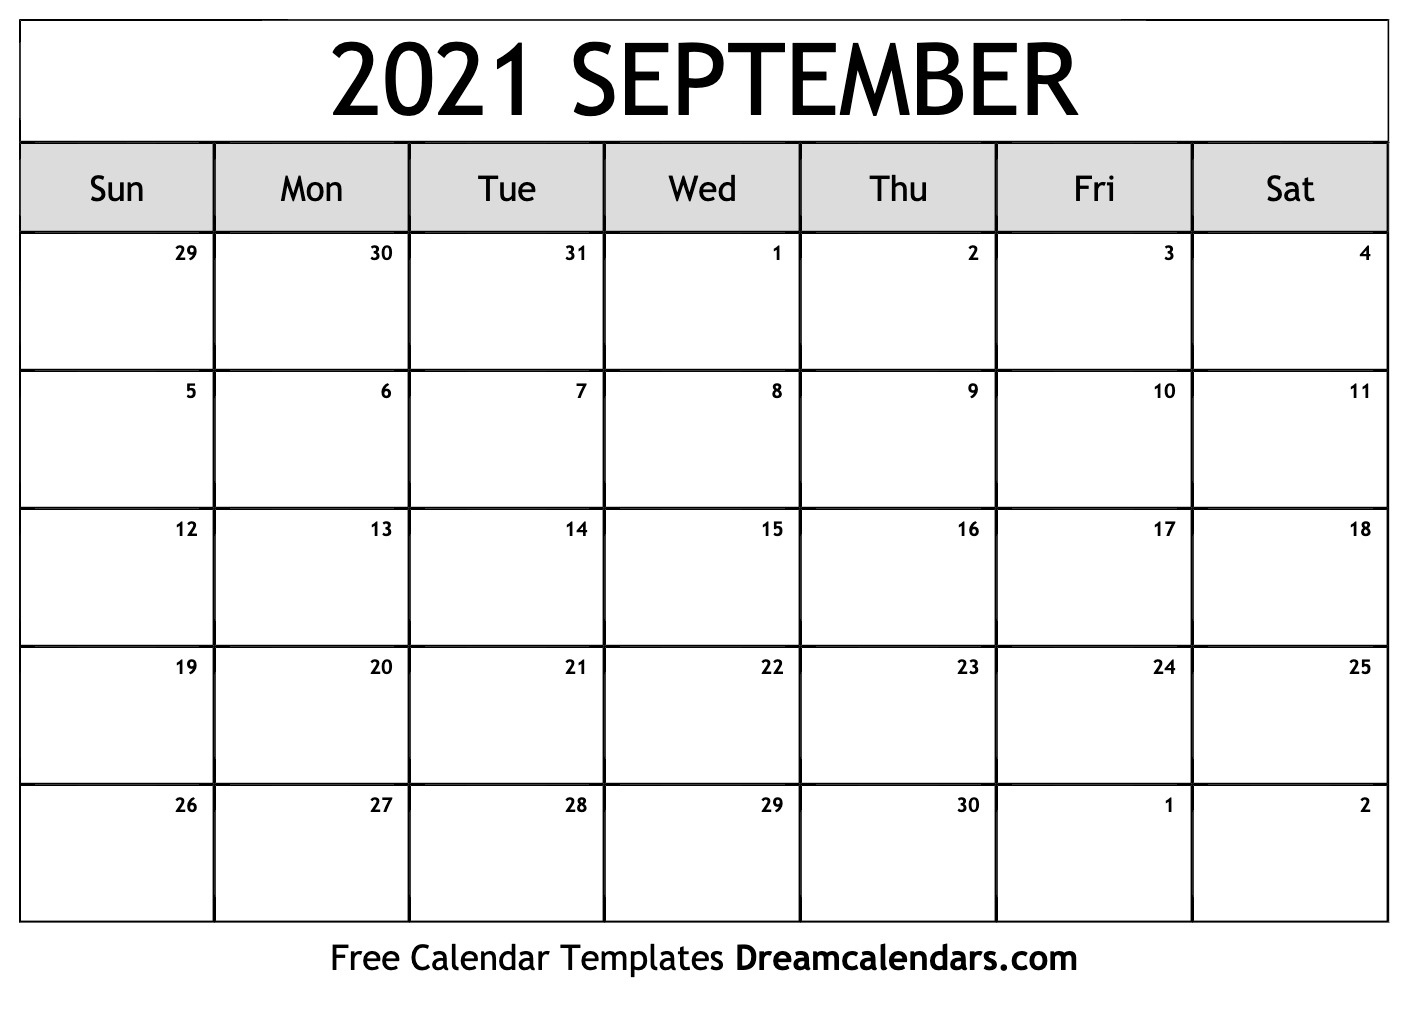 Print Free 2021 Calendar Without Downloading | Calendar Printables Free Blank September 2020 To September 2021 Calendar